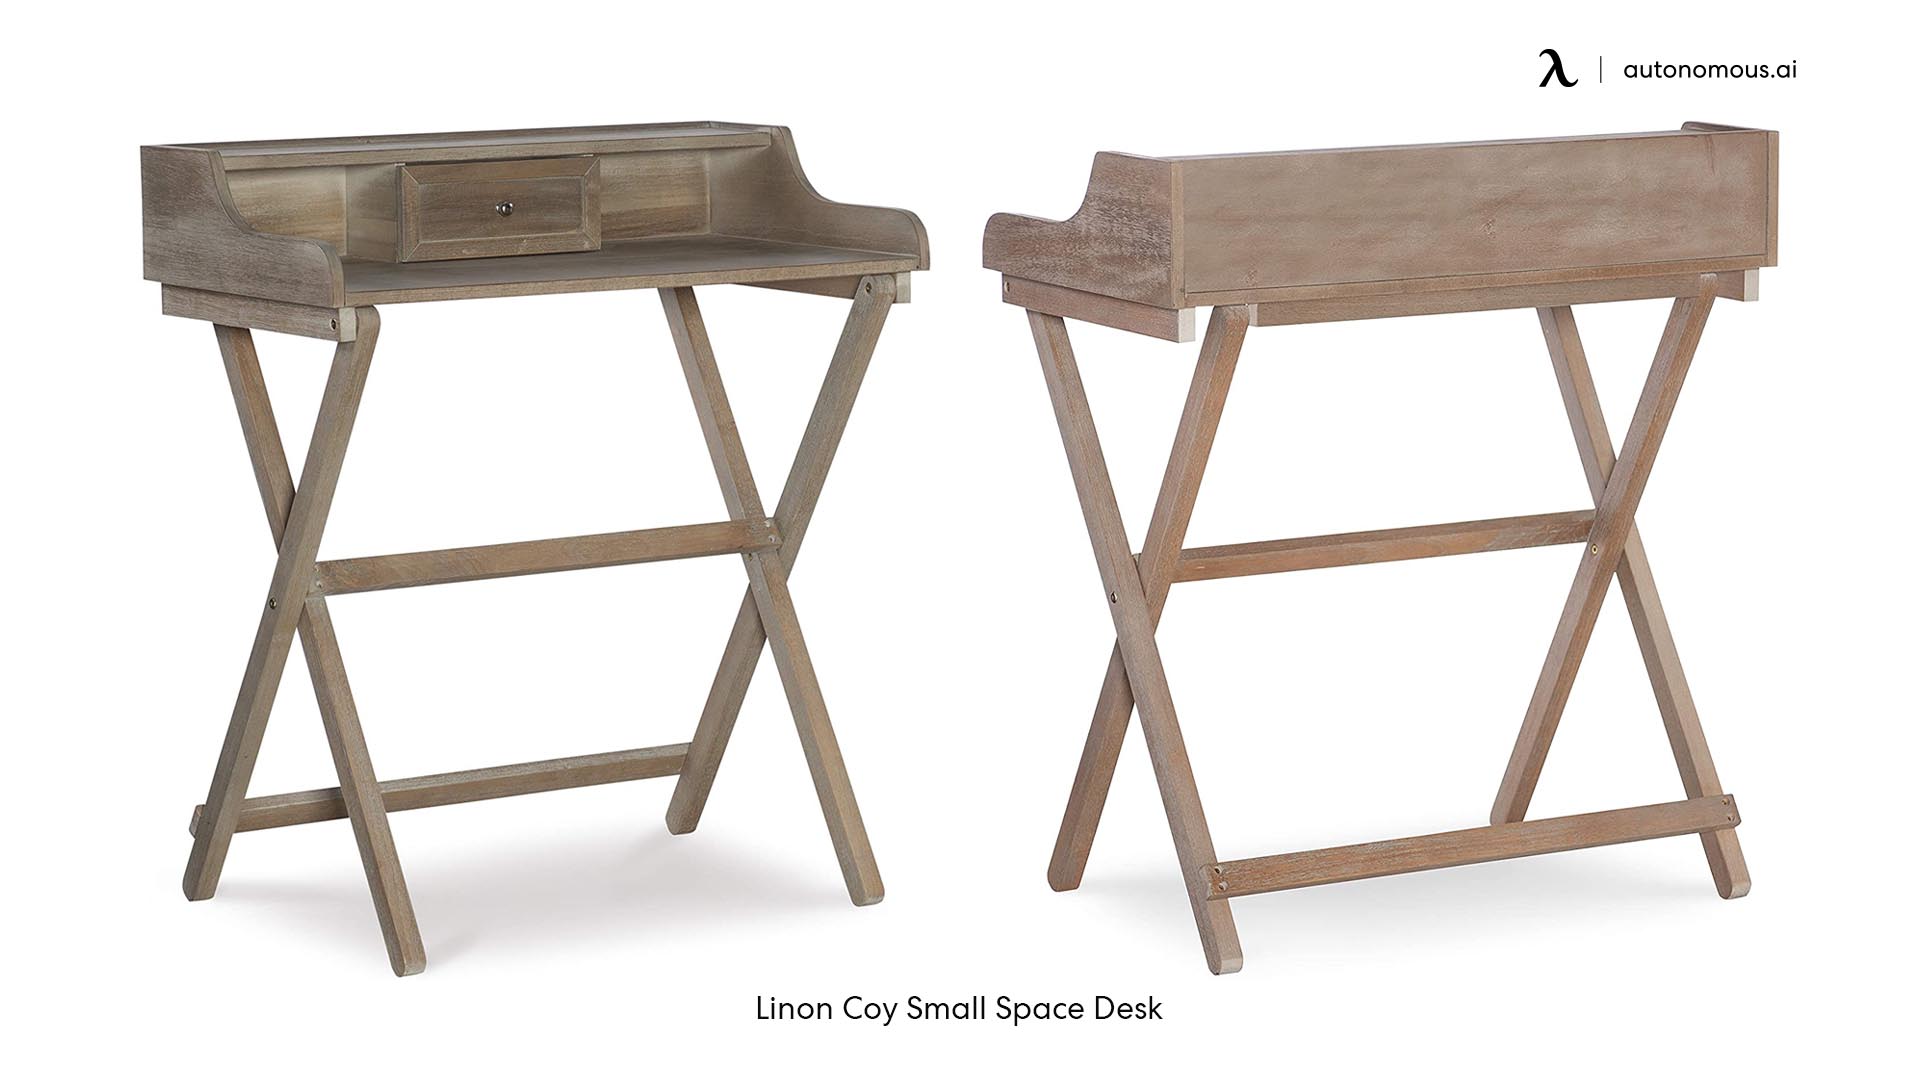 Linon Coy desks for small spaces